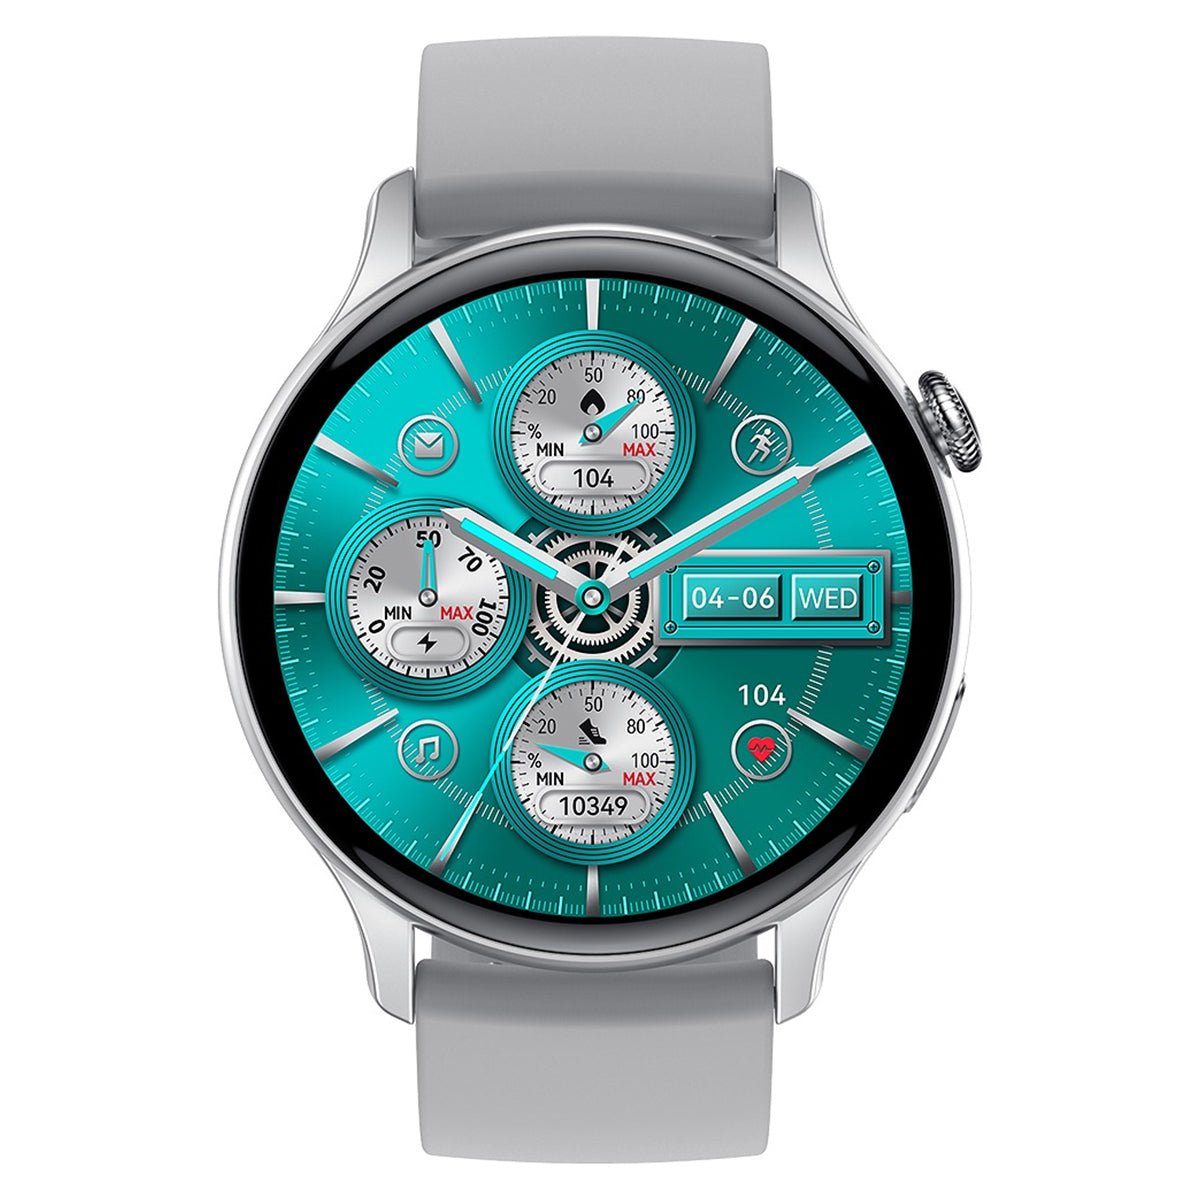 Reloj Smartwatch Hk85 Fralugio Full Touch 1.43´ Notificacion